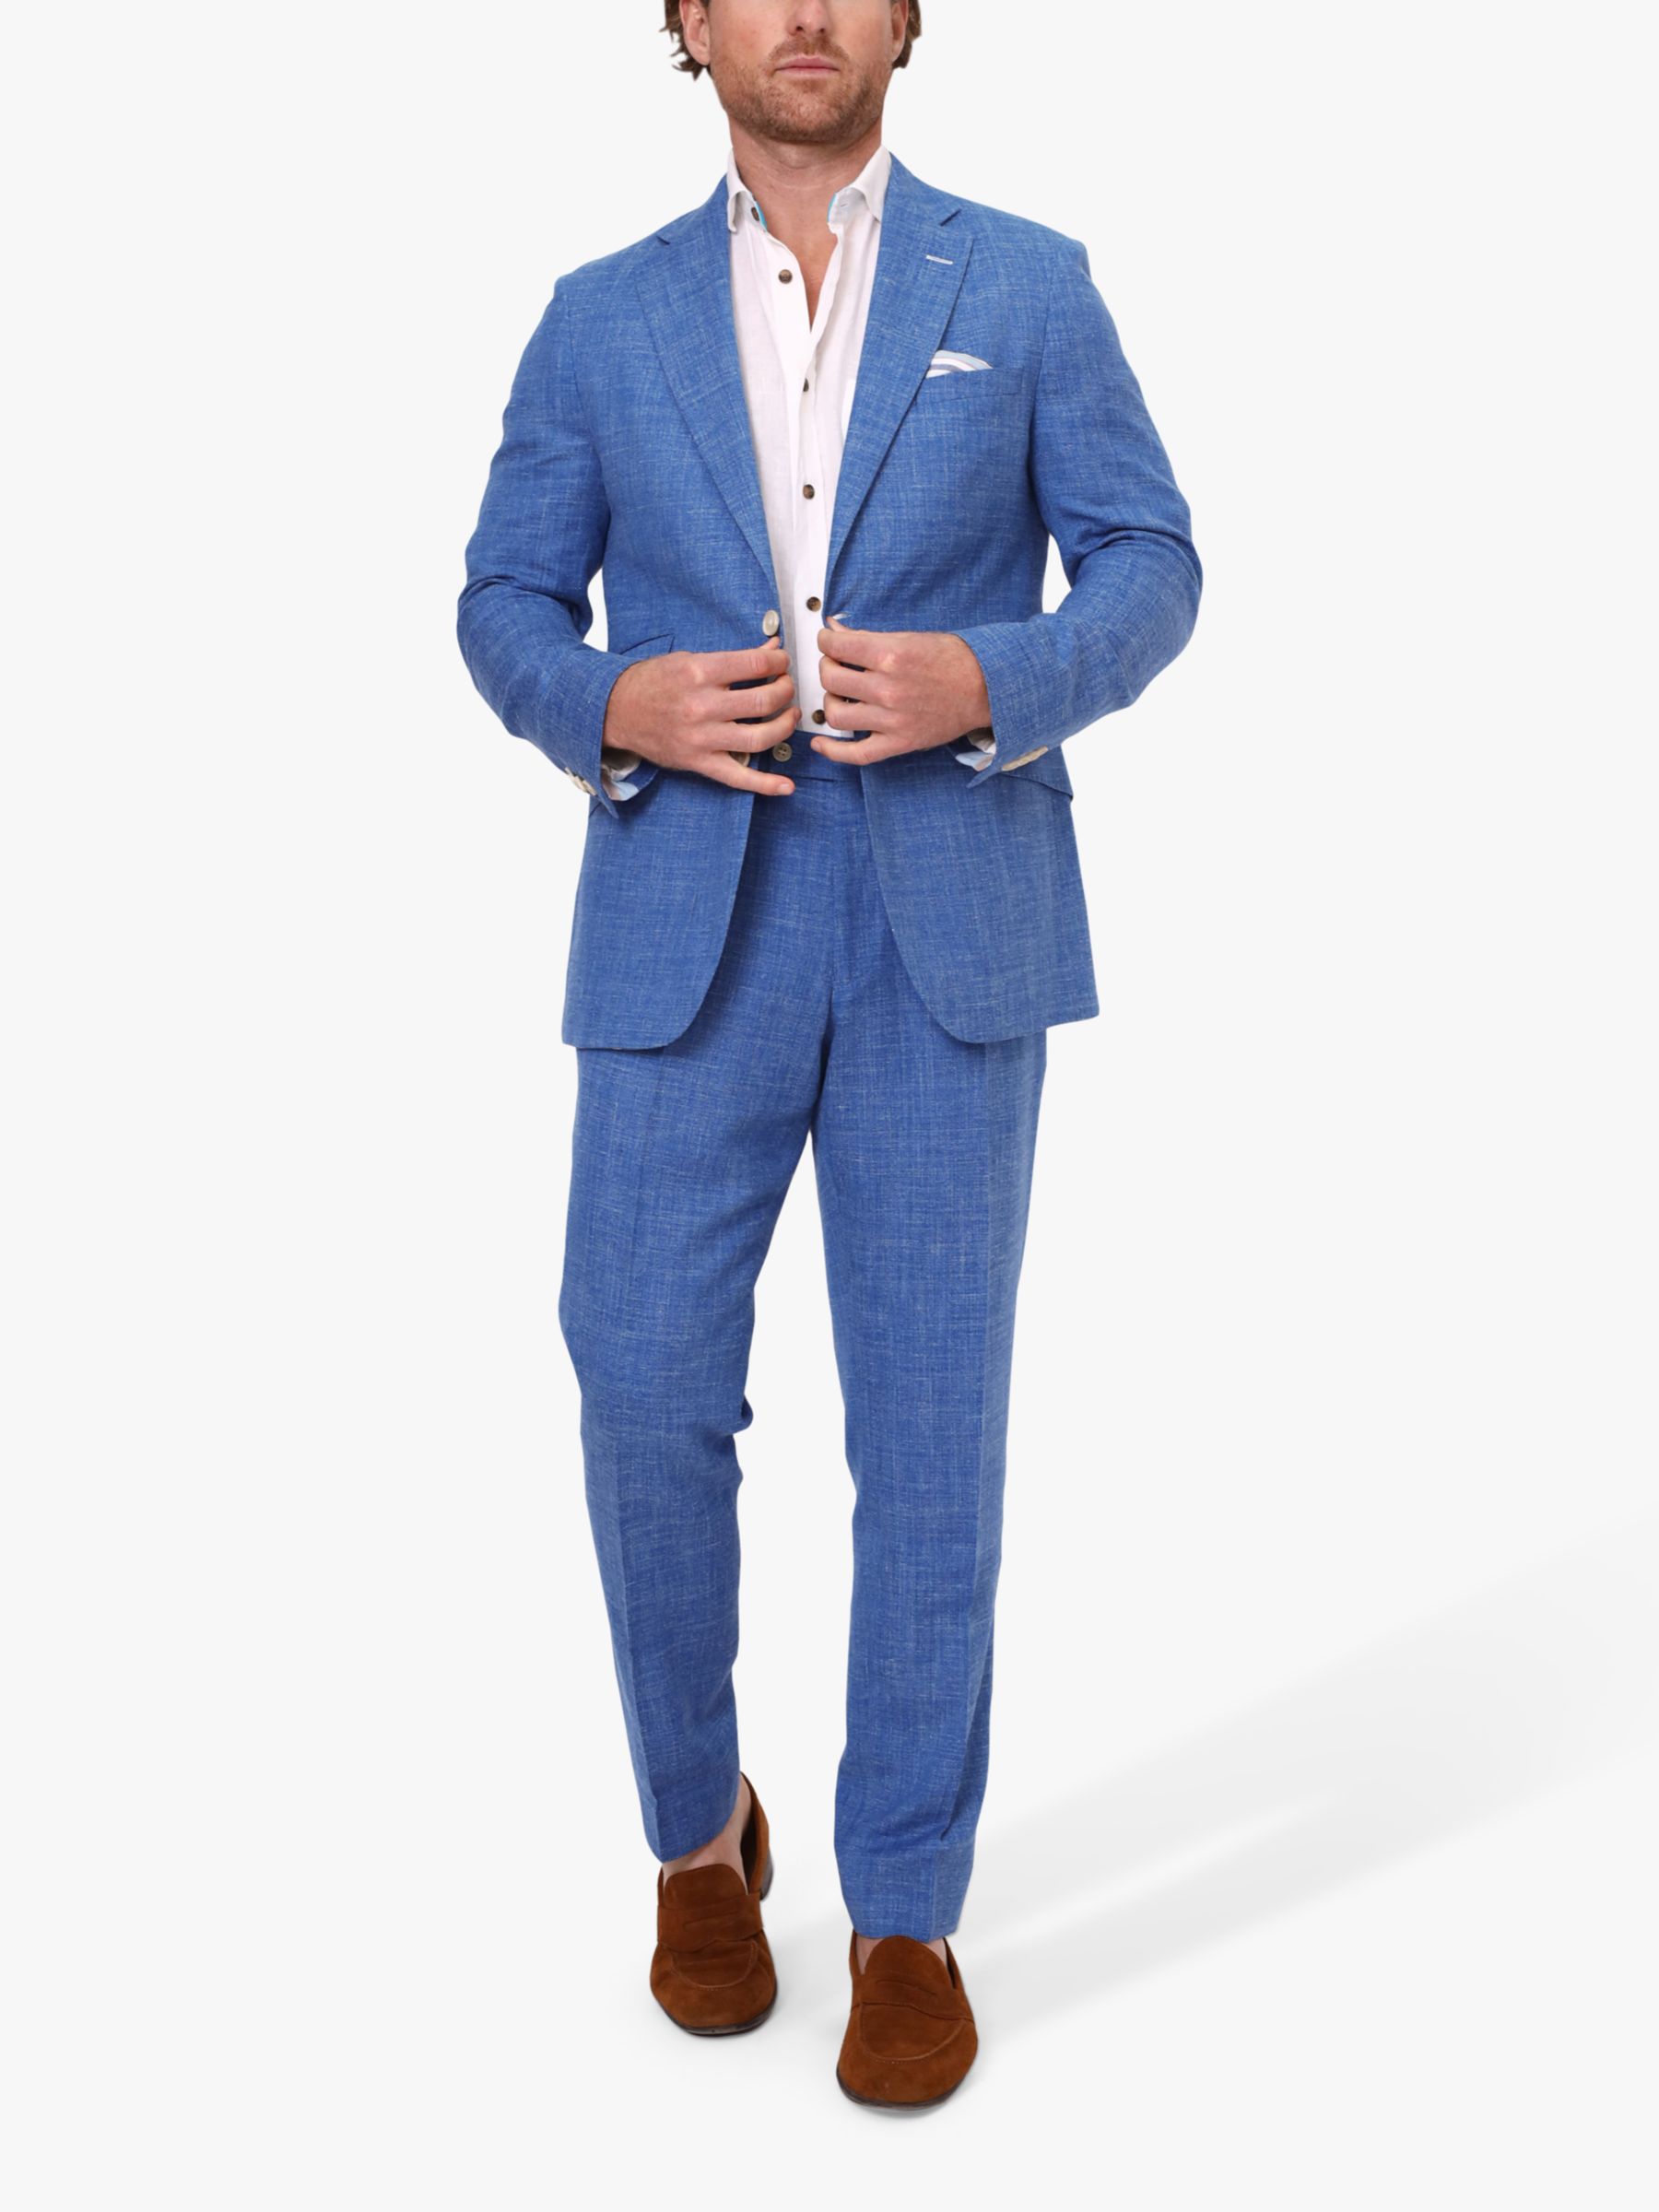 Buy KOY Linen Blend Suit Jacket, Mid Blue Online at johnlewis.com